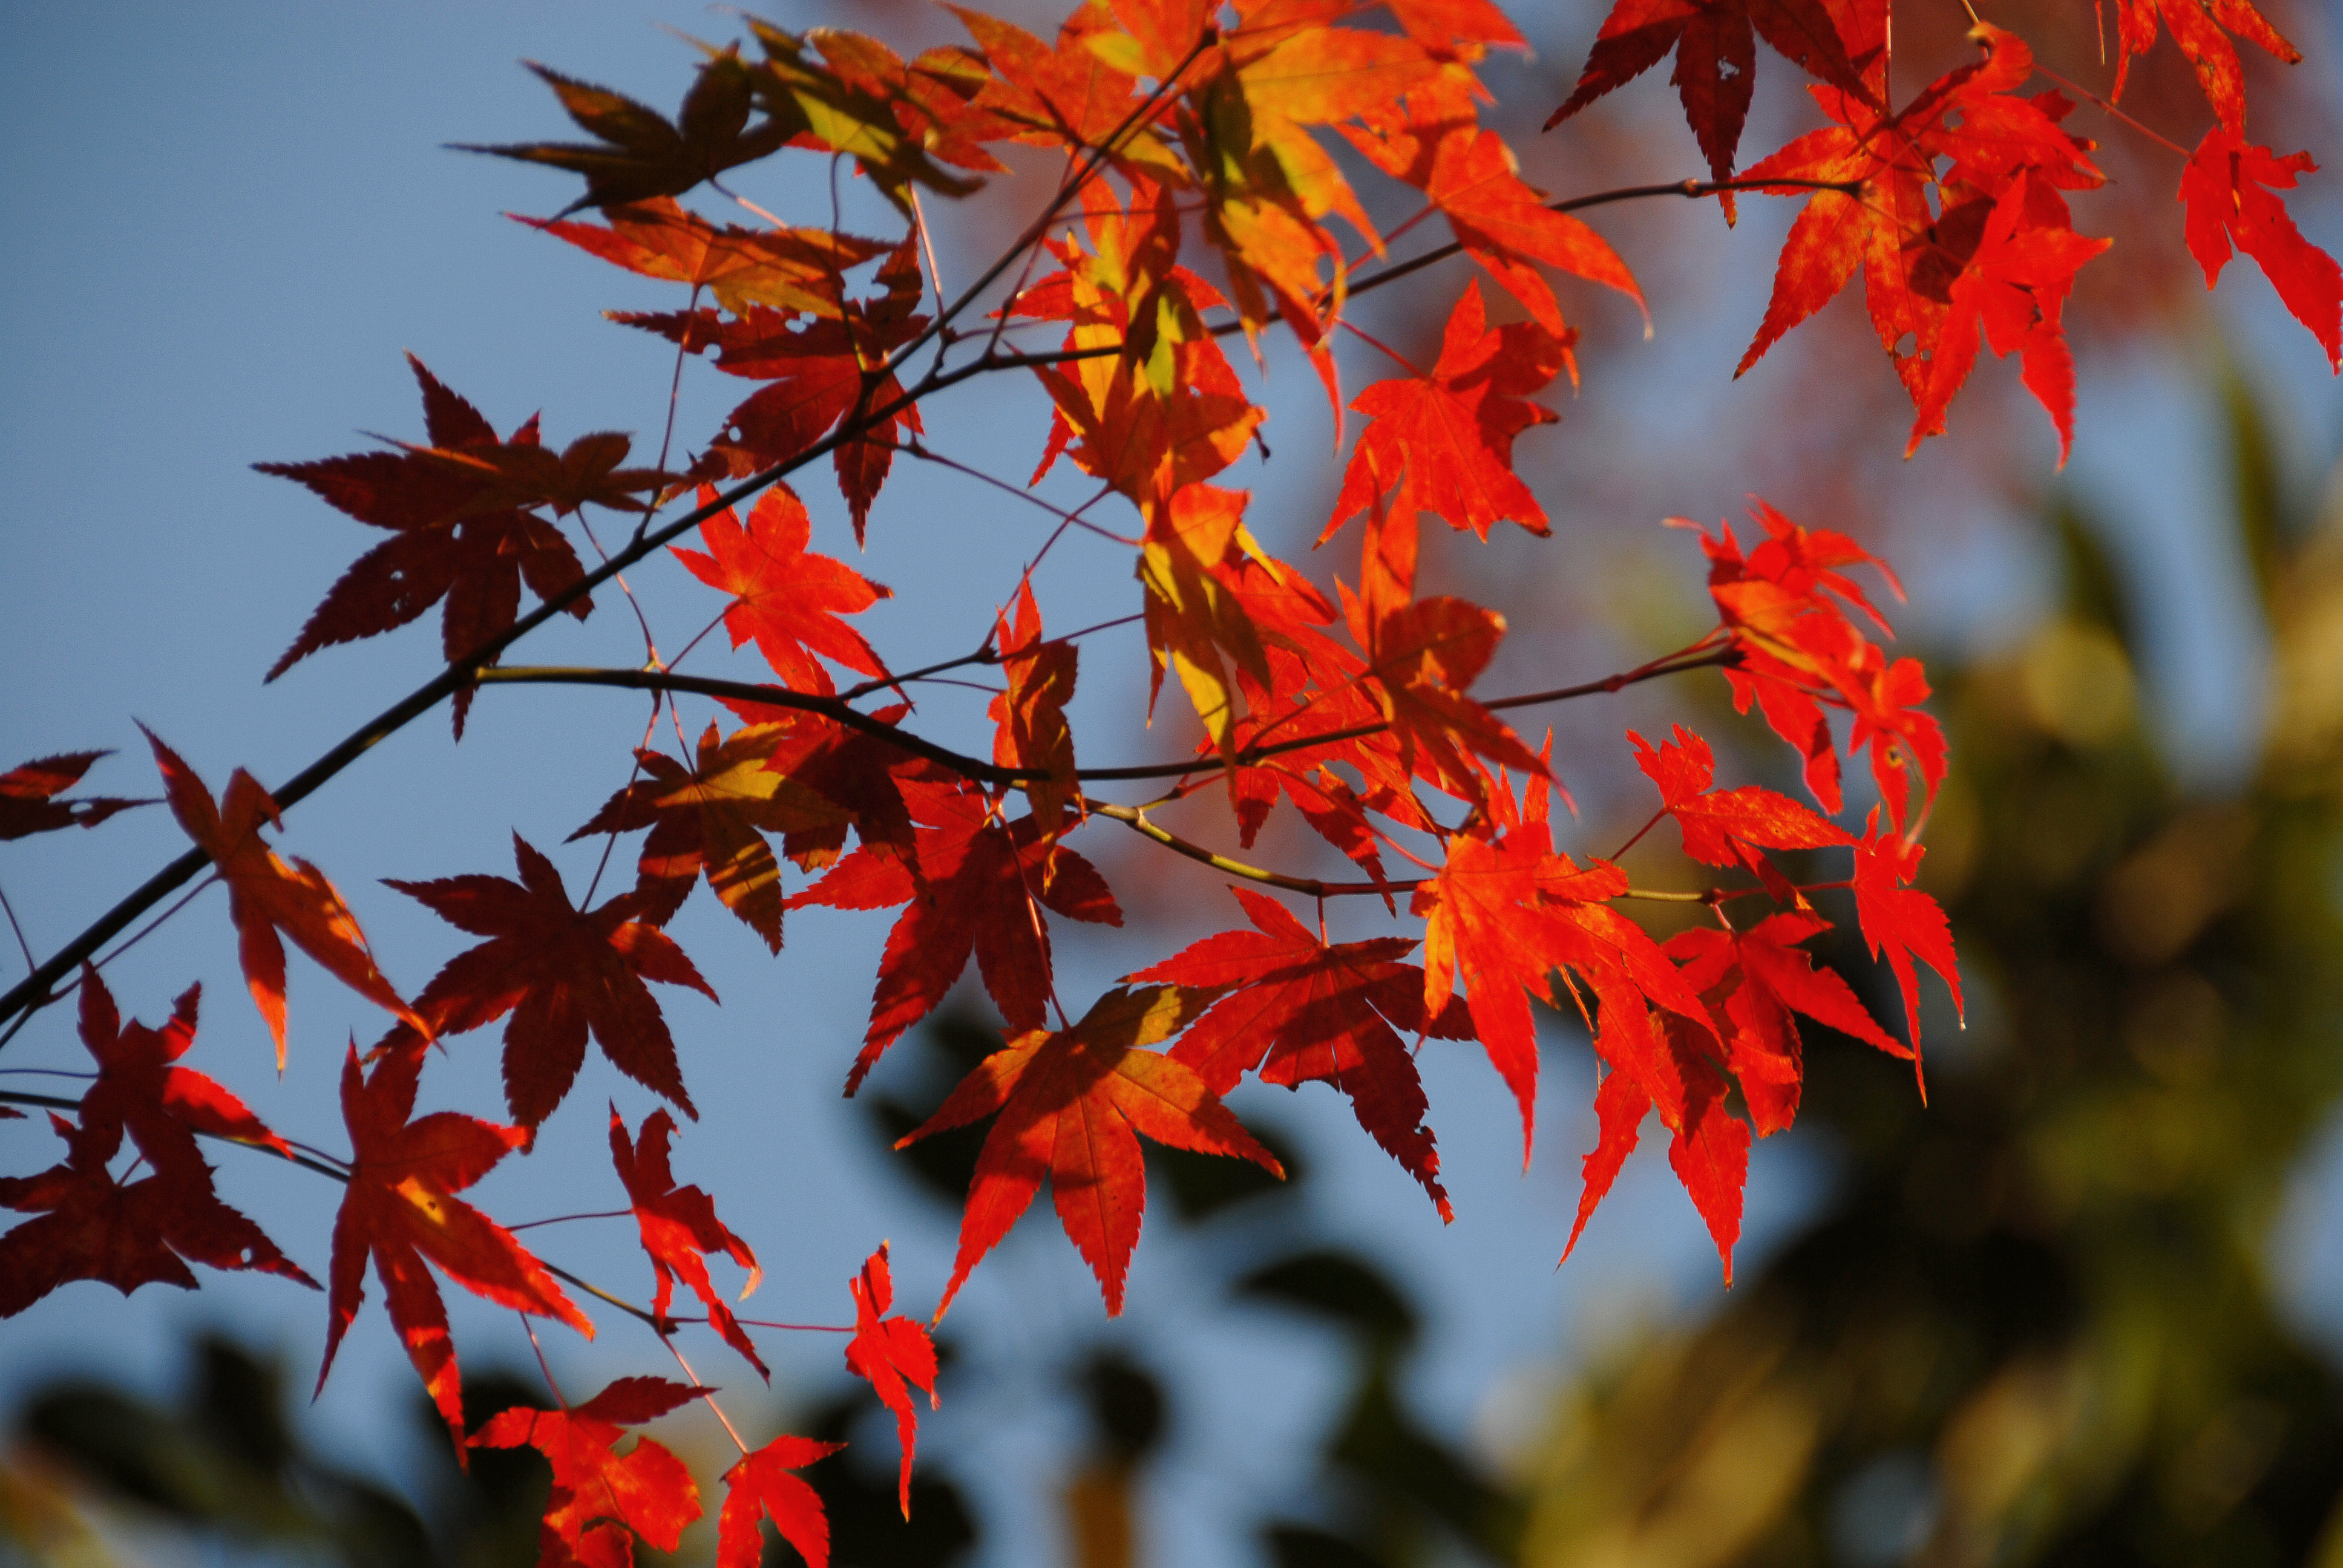 Jikishian kyoto autumn leaves https://www.flickr.com/photos/23713037@N07/